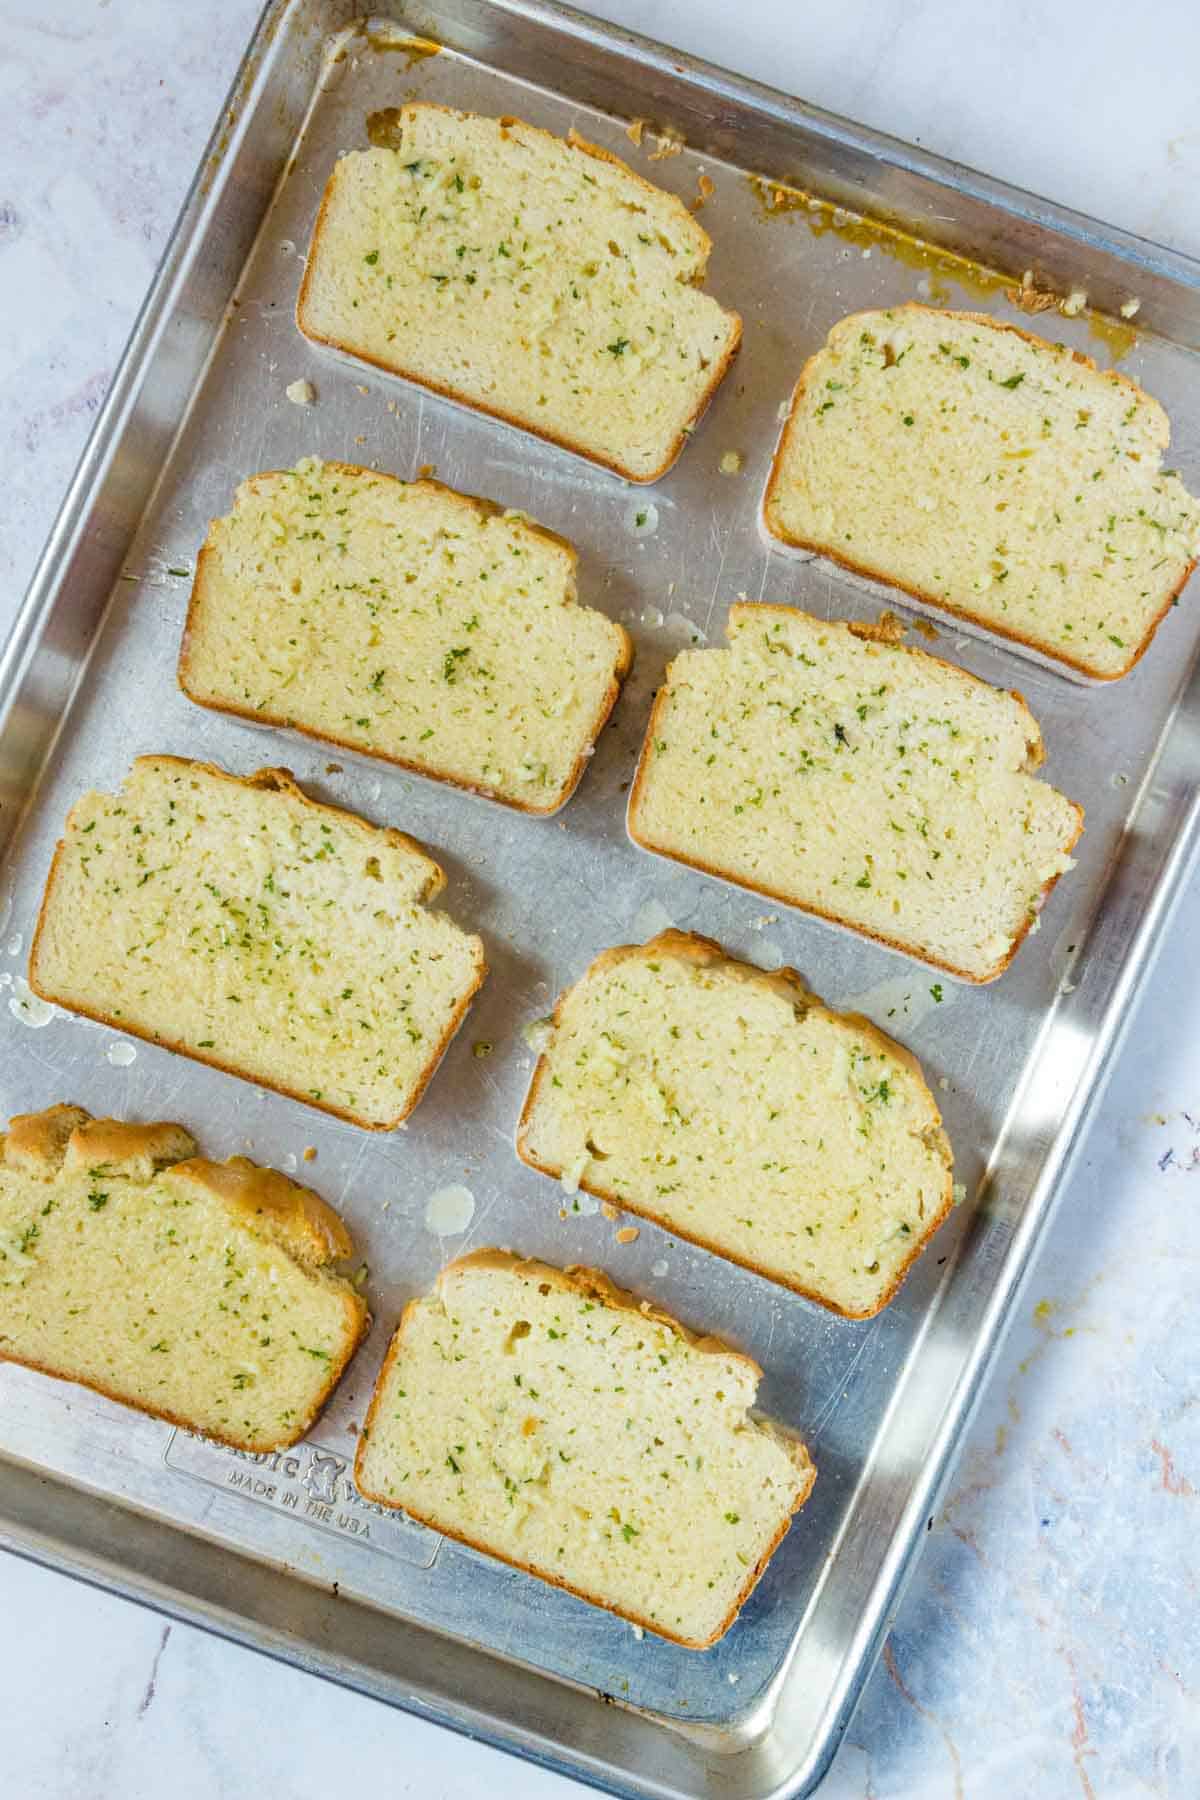 Rows of Texas garlic toast on a baking sheet.